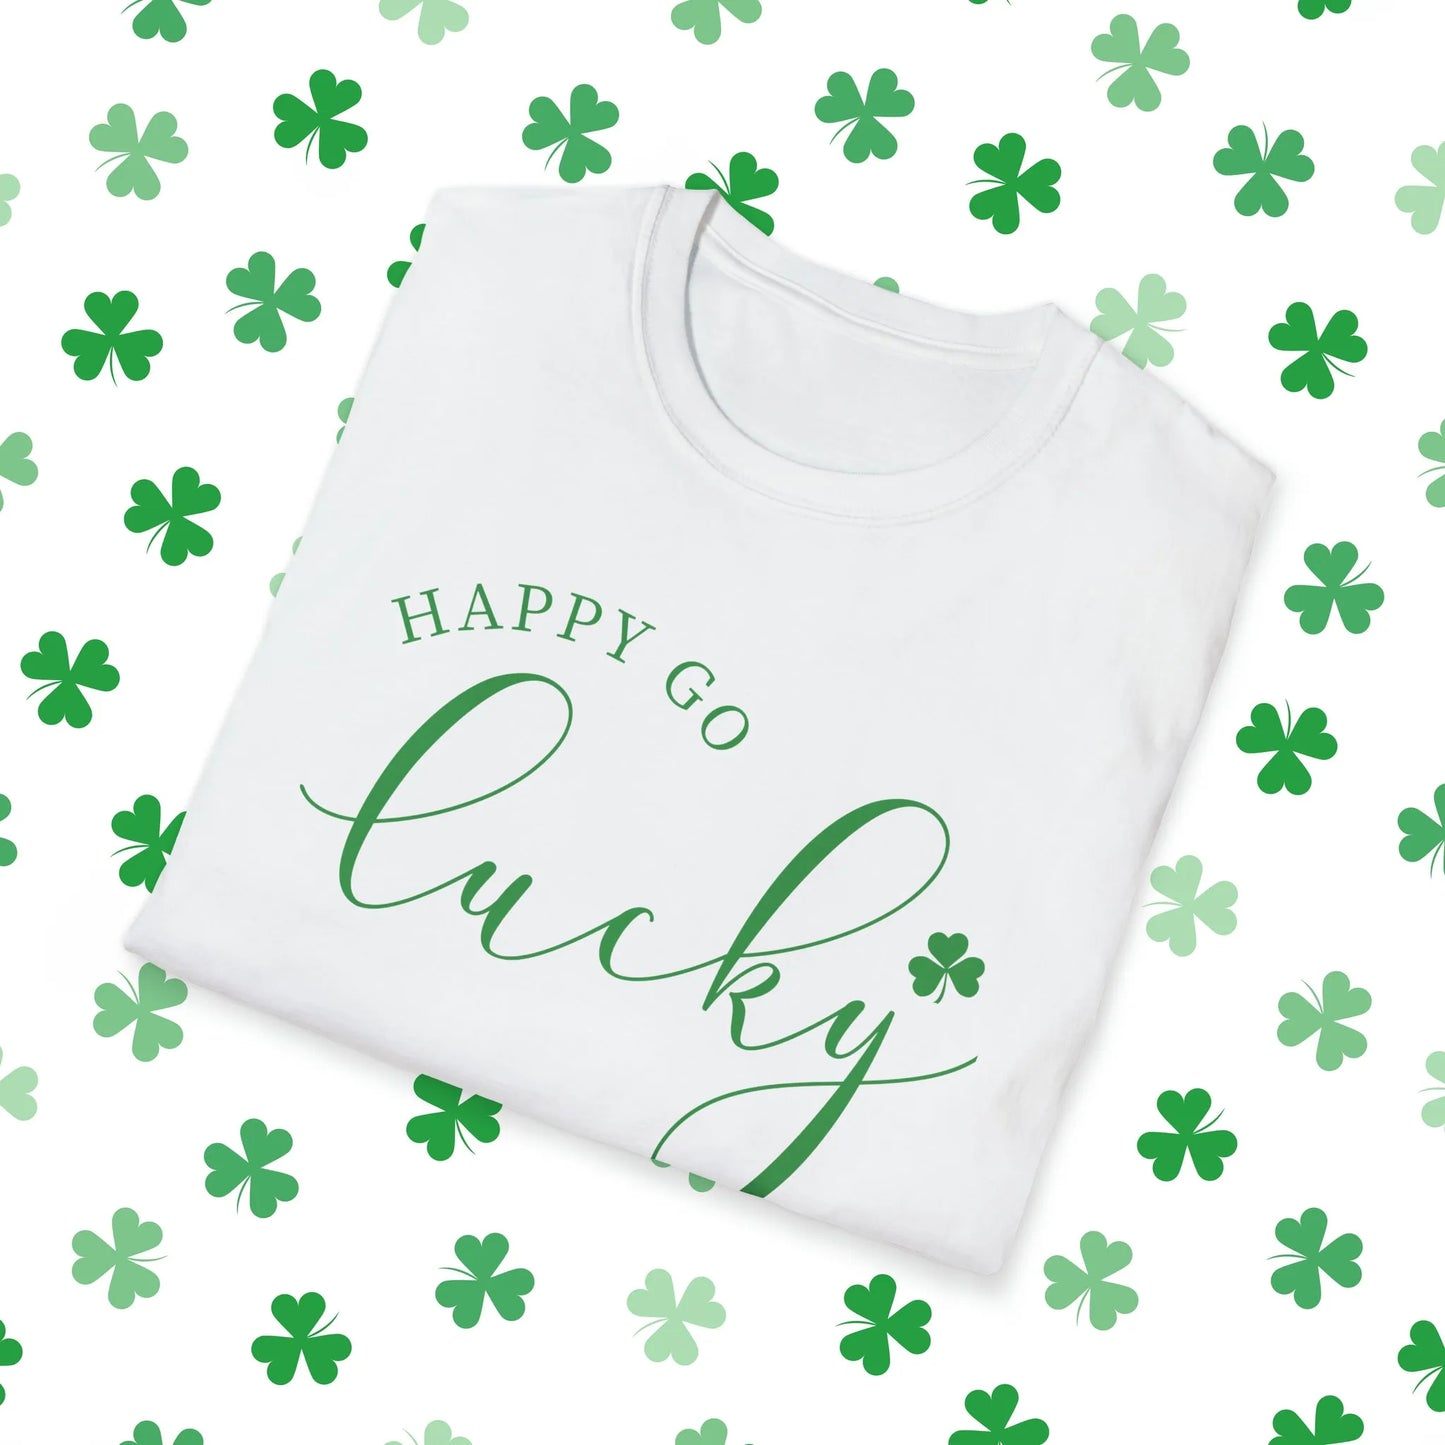 Happy Go Lucky St. Patrick's Day Rainbow T-Shirt - Happy Go Lucky St. Patrick's Day Shirt